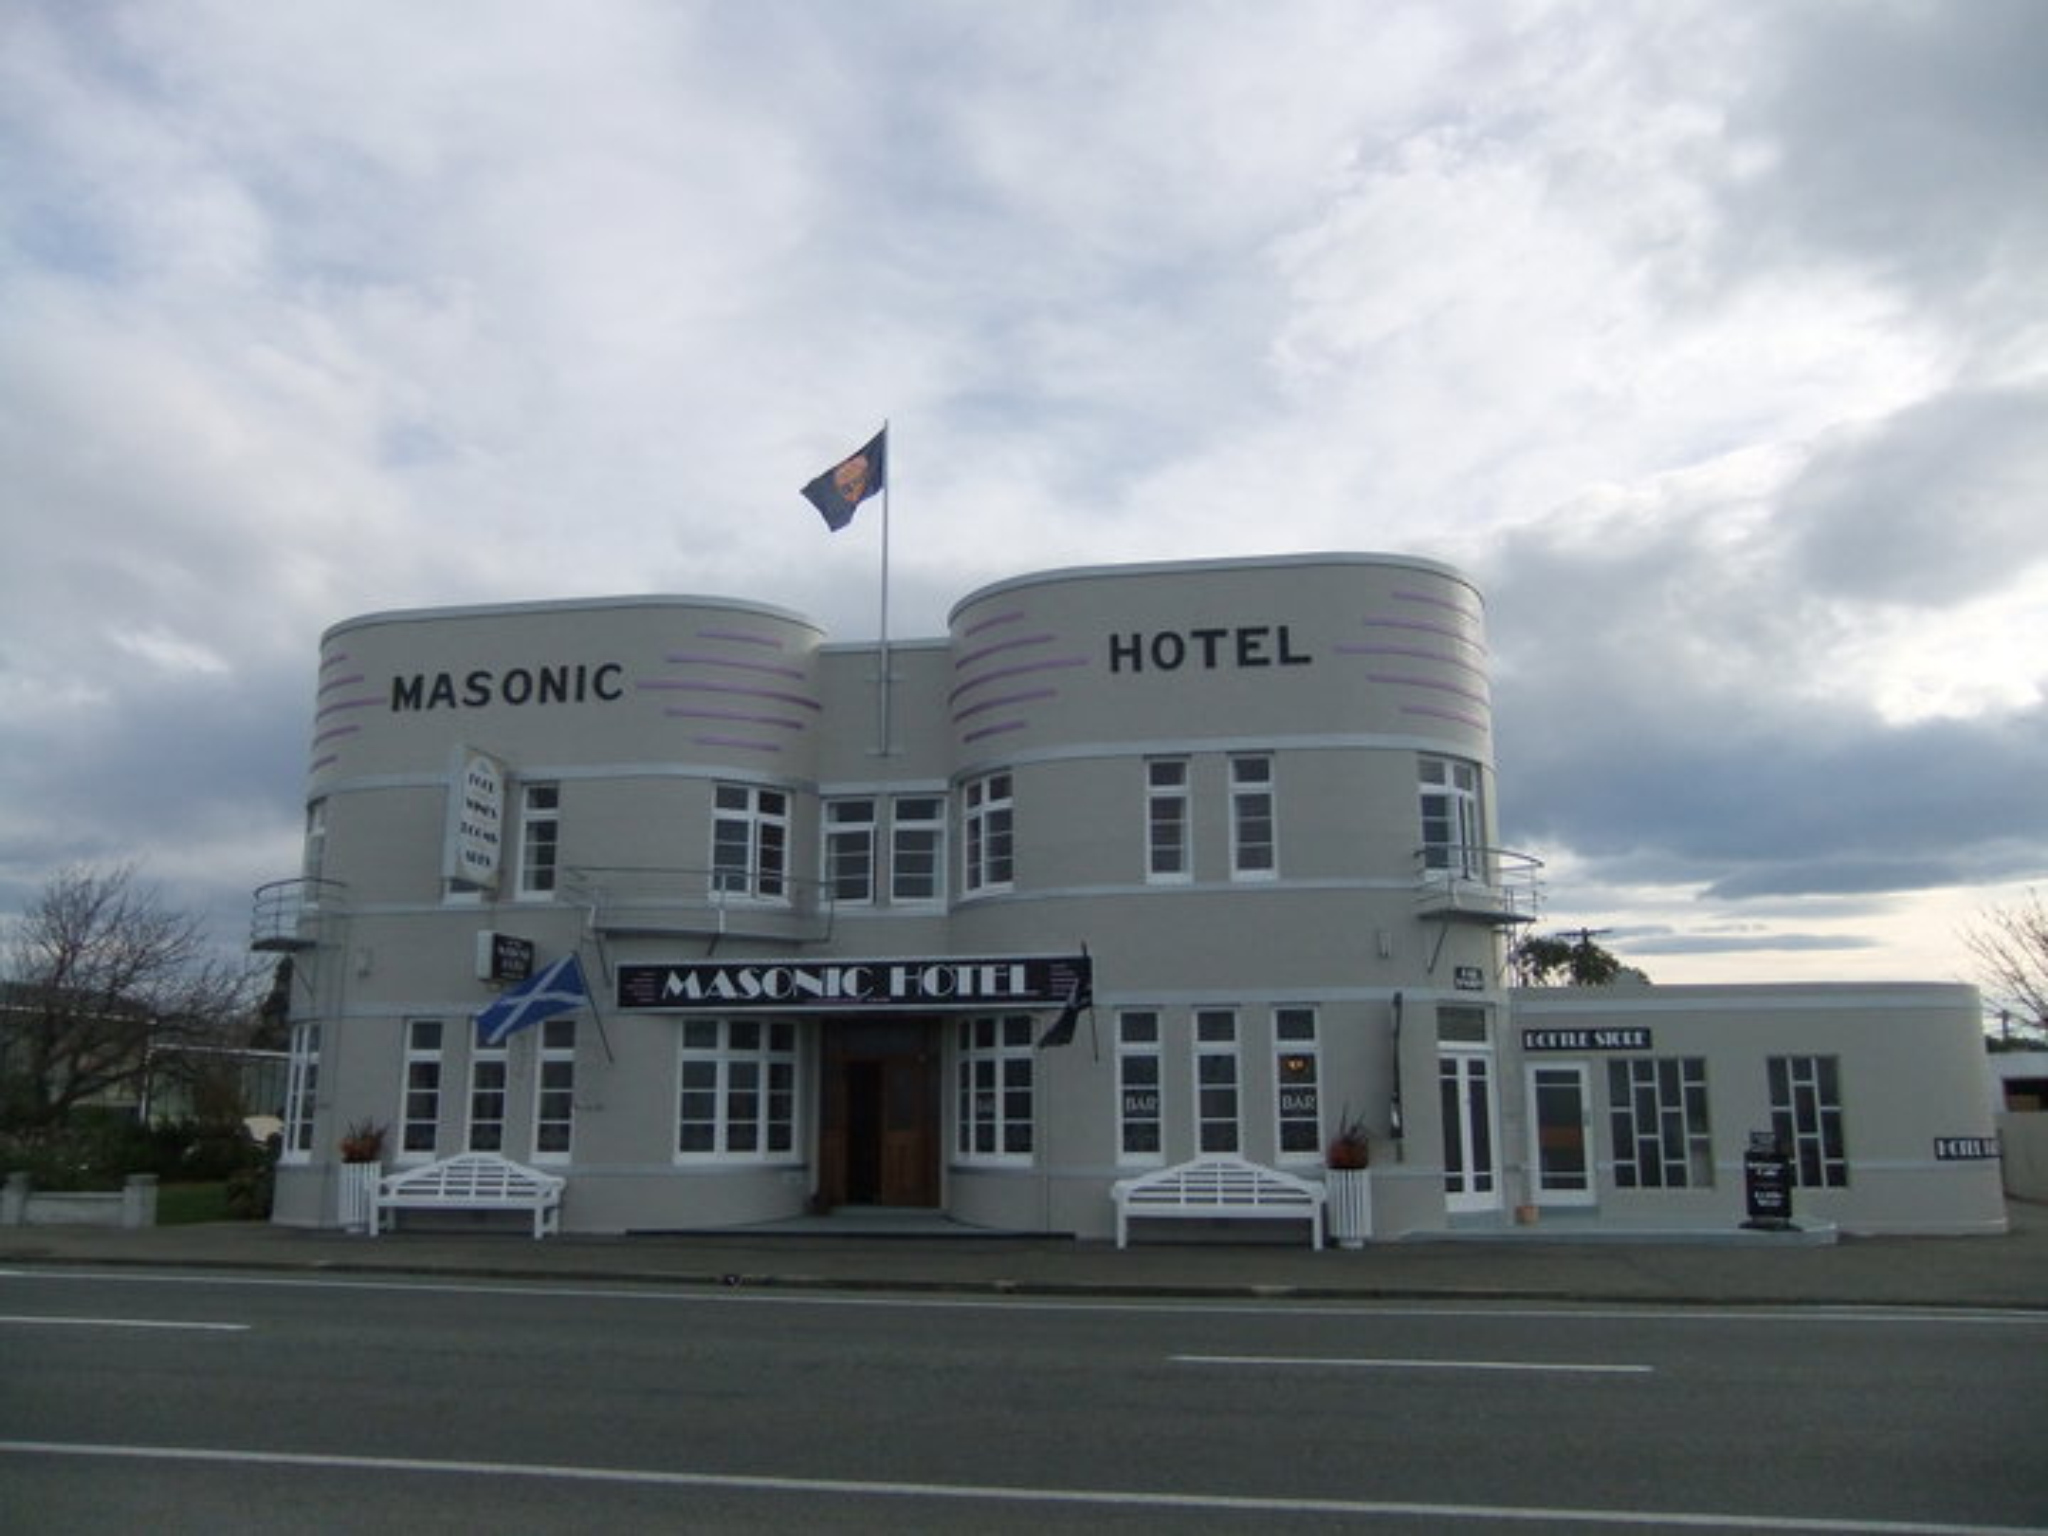 Masonic Hotel, St Andrews